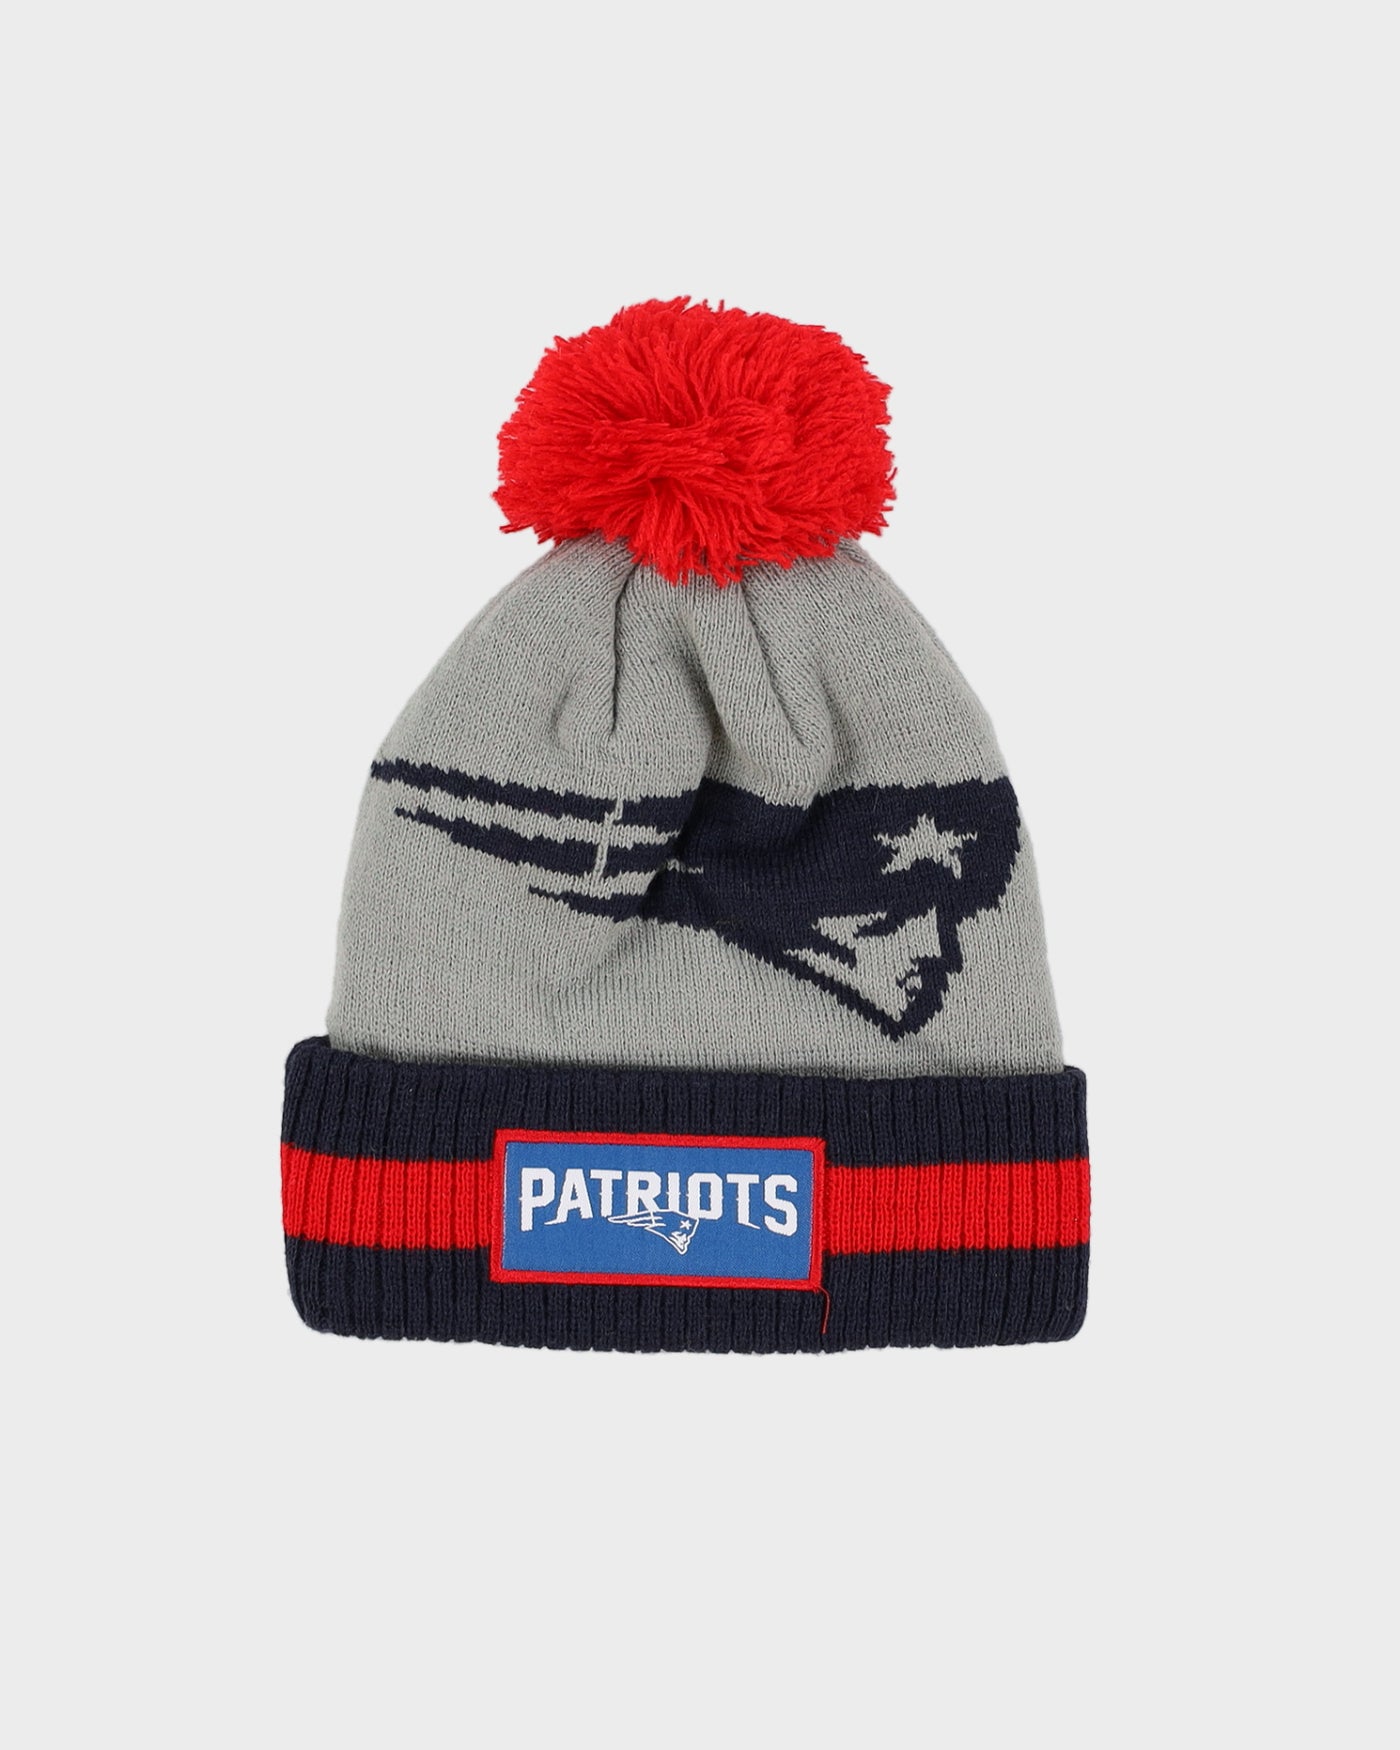 New England Patriots NFL Bobble Hat Beanie